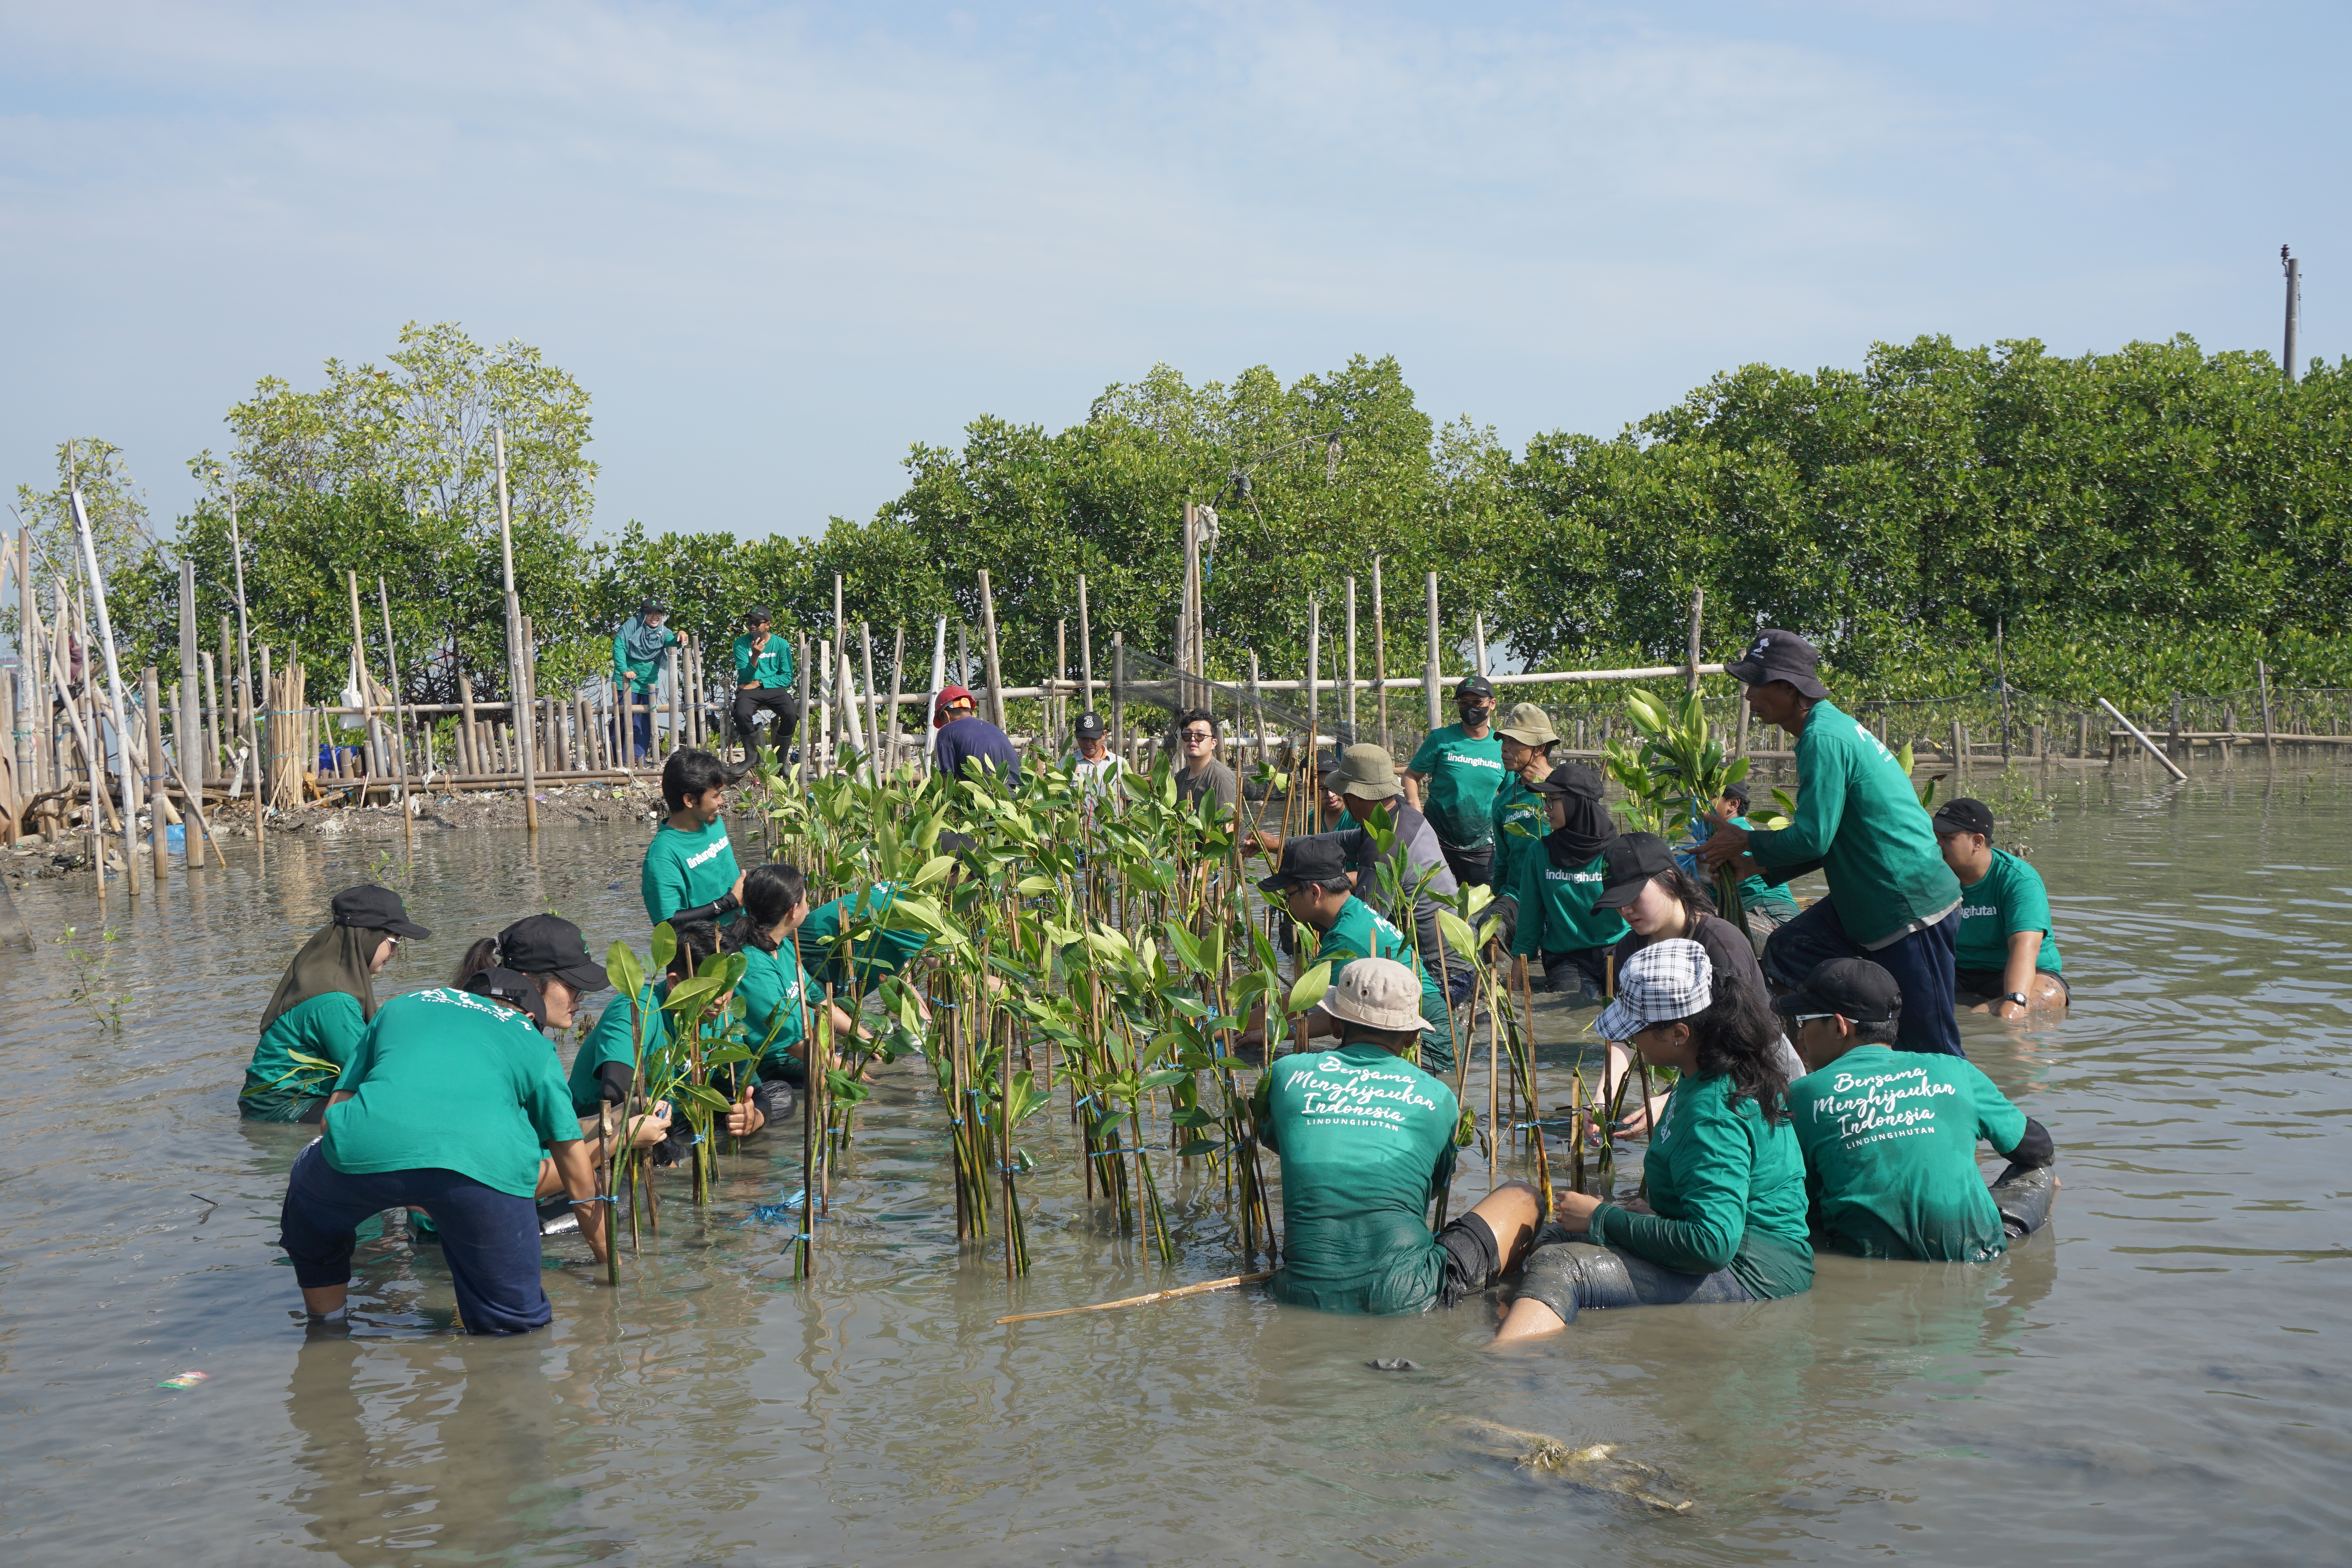 Penanaman mangrove tim LindungiHutan di Tambakrejo, Semarang. (Dokumentasi: LindungiHutan).